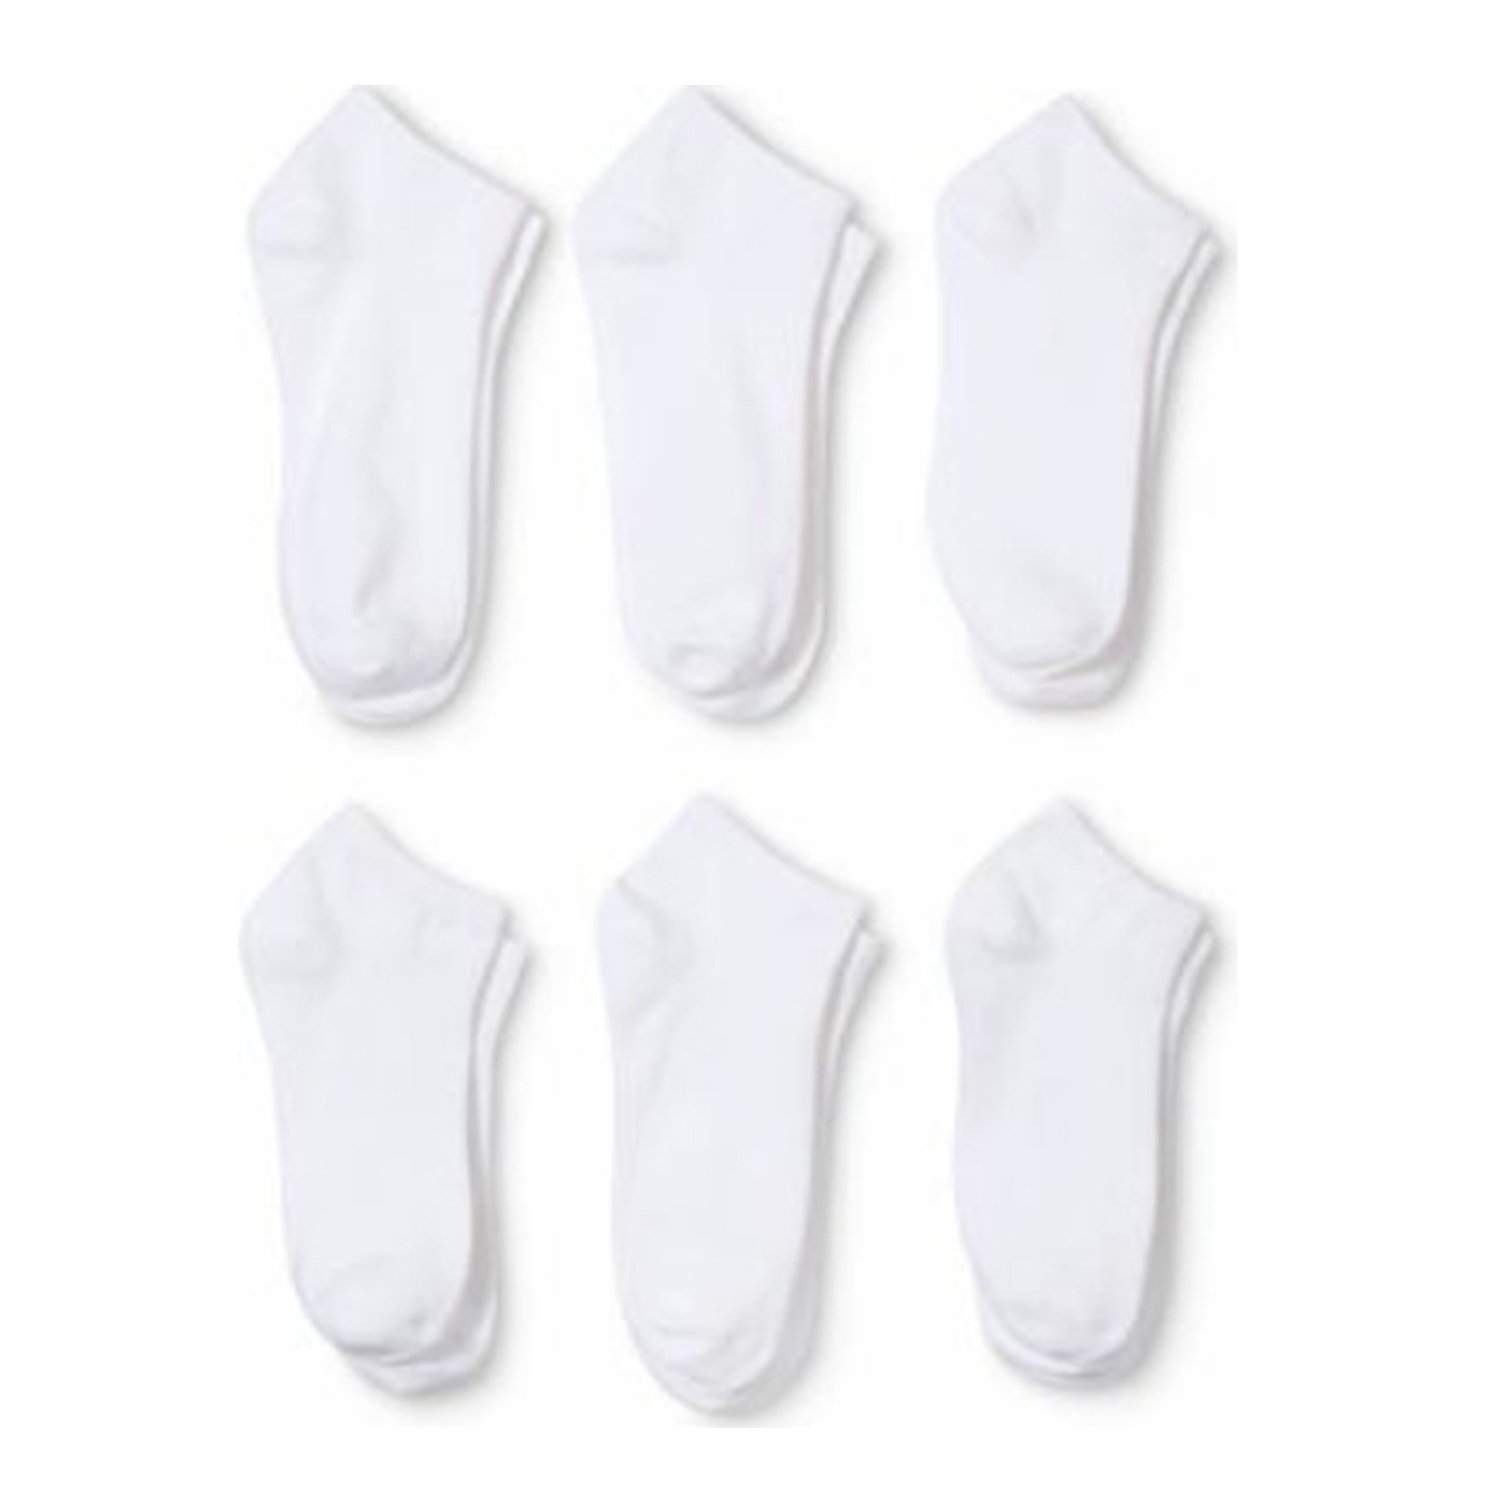 100 Pairs Men's Low Cut No Show Socks 9-11 or 6-8 Black or White - Bulk Wholesale